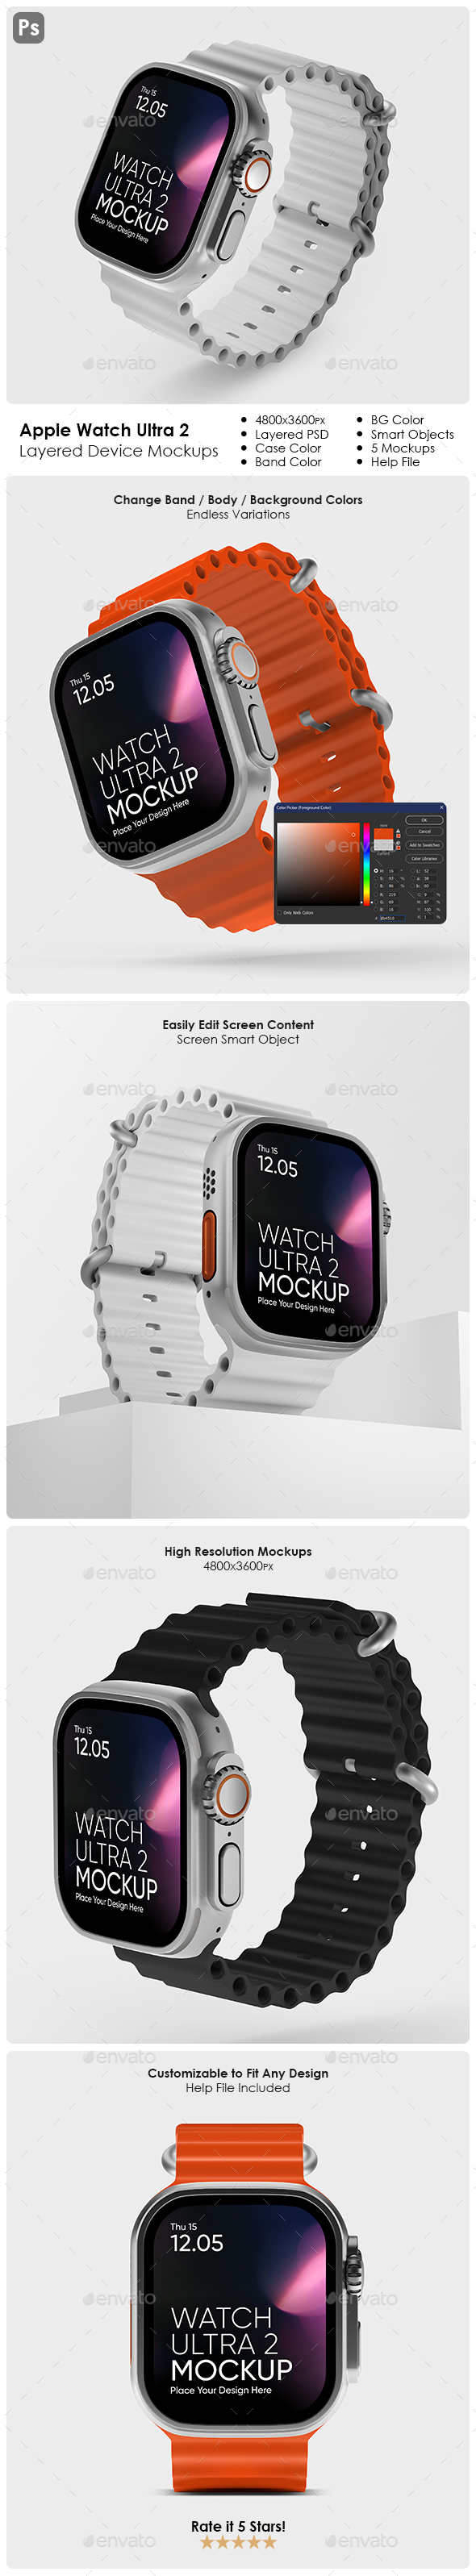 Apple Watch Ultra 2 Device Mockups